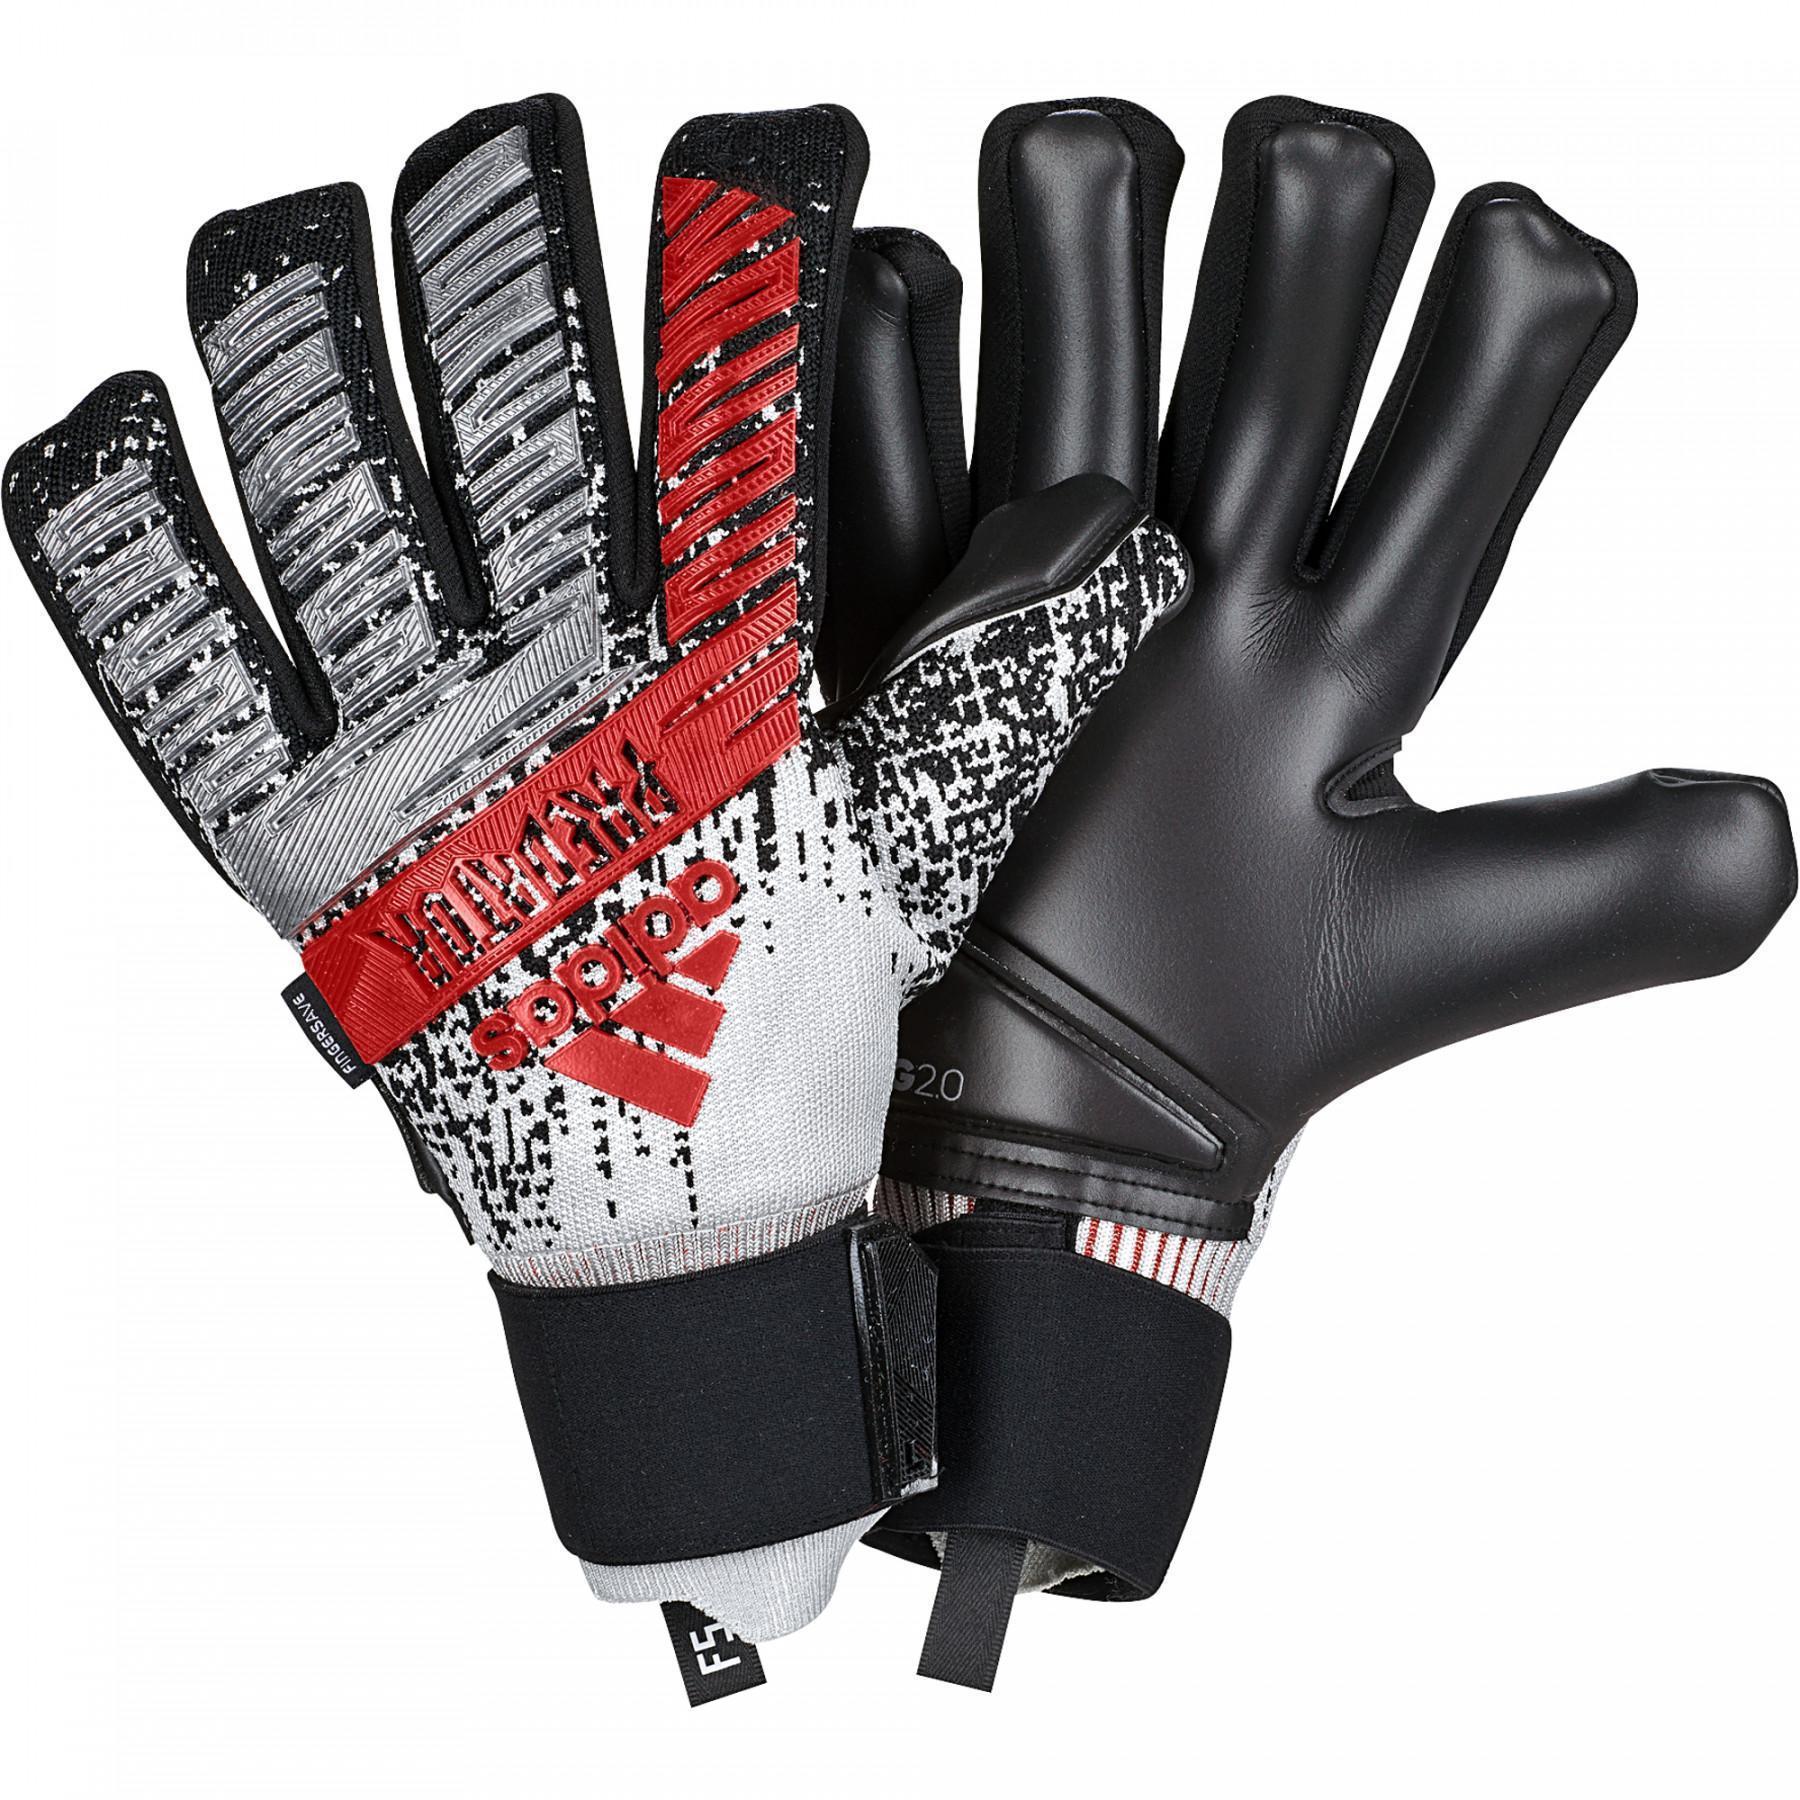 Goalkeeper gloves adidas Predator Pro Fingersave